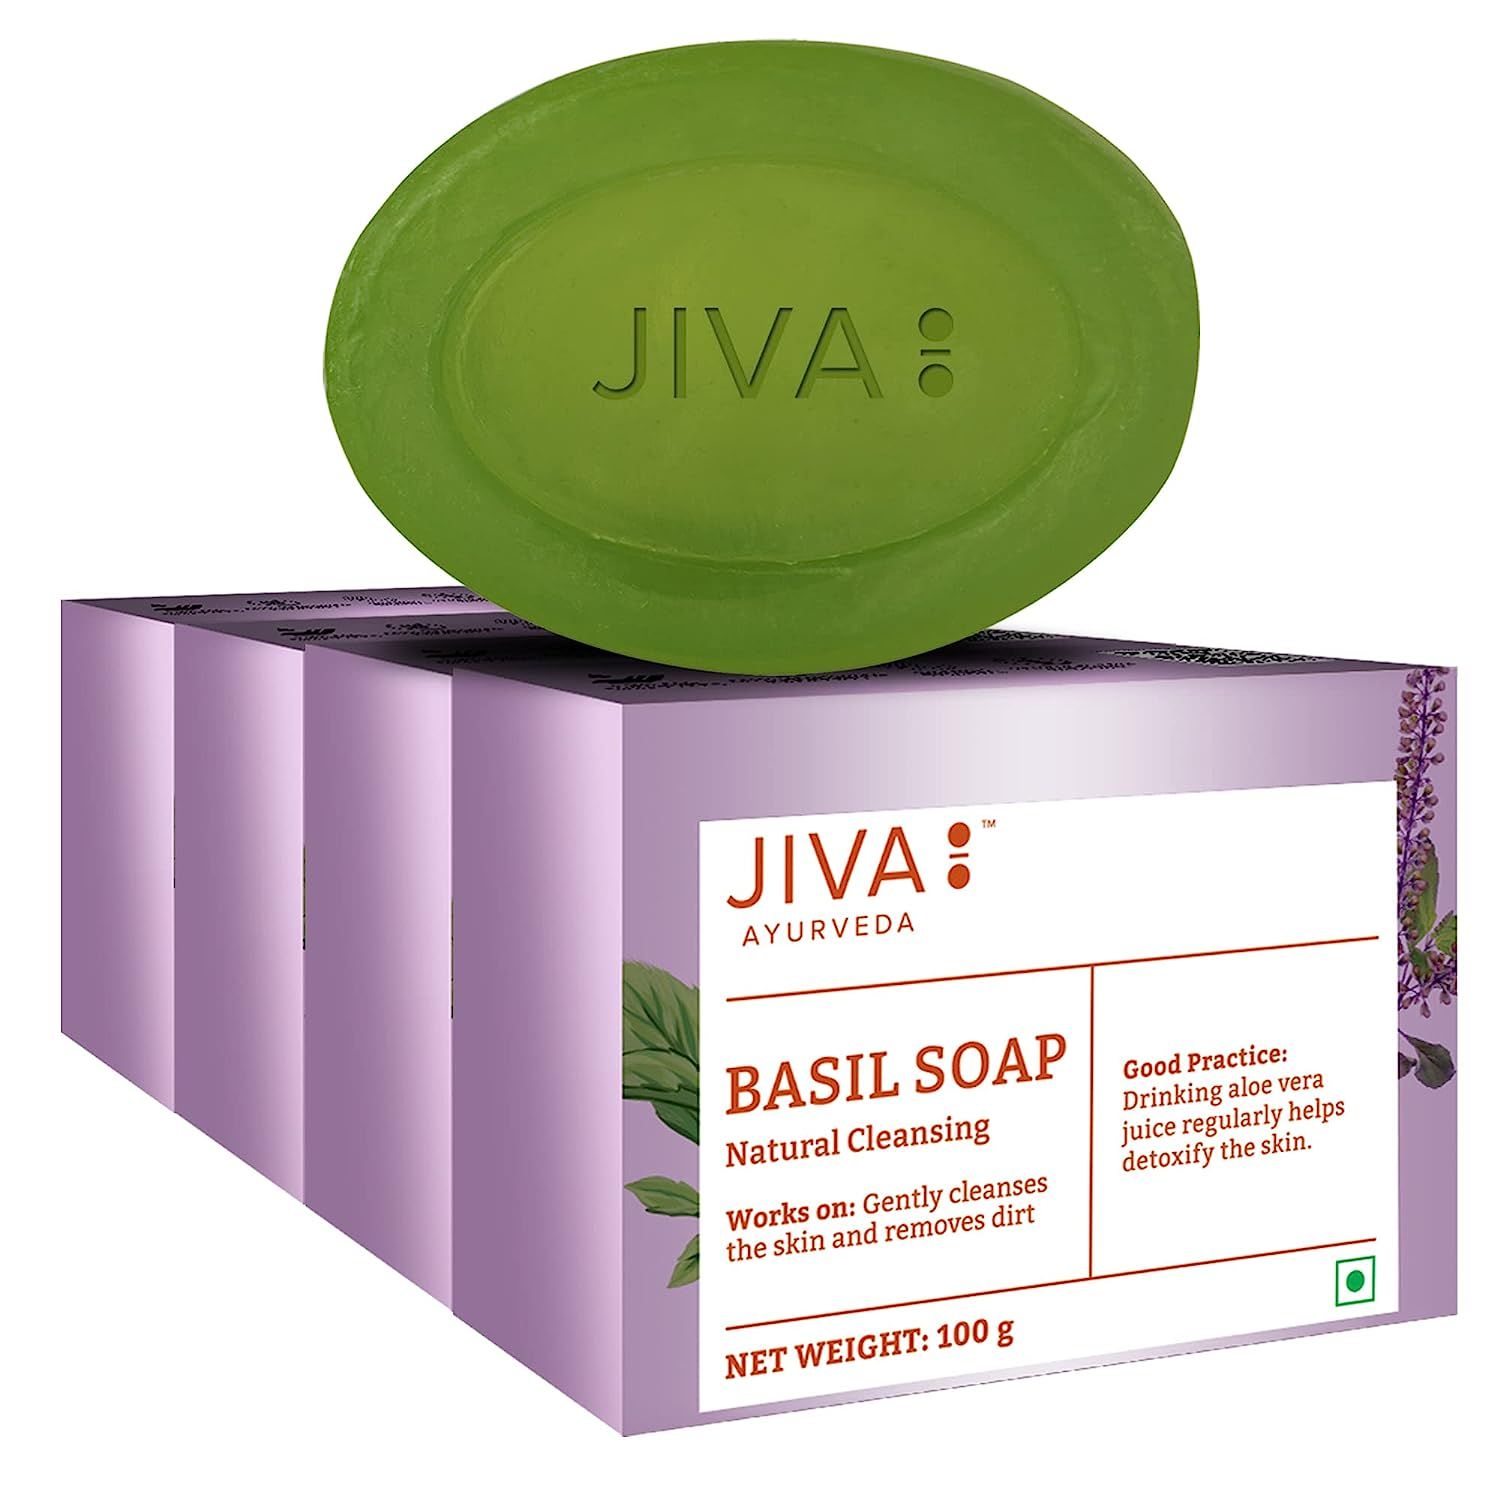 Buy Jiva Ayurveda Basil Soap at Best Price Online